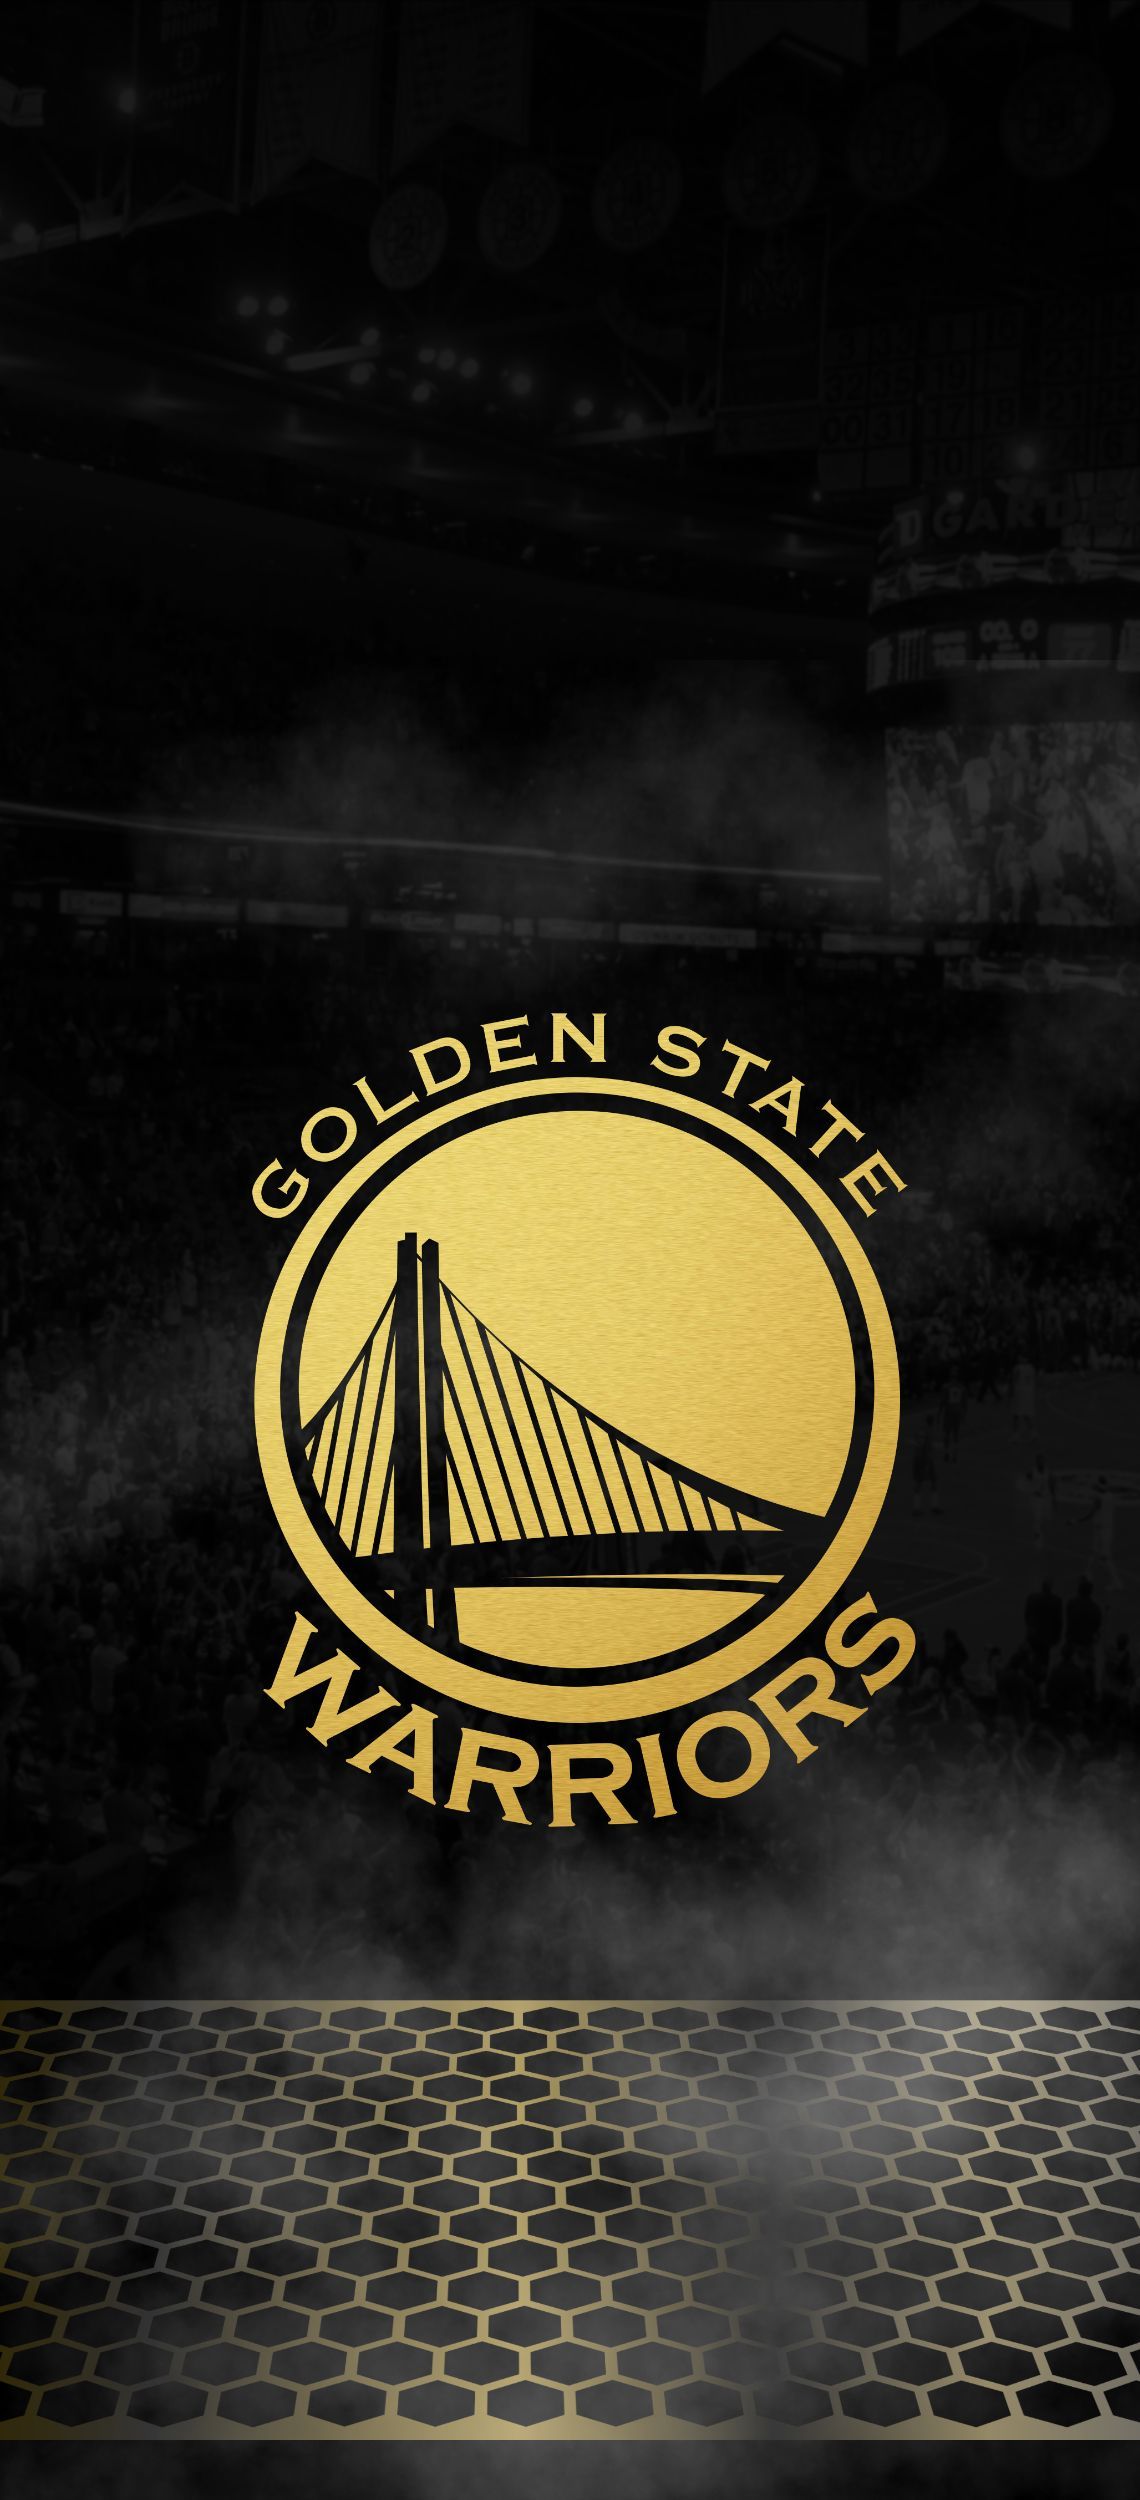 Golden State Warriors Screensaver Wallpapers